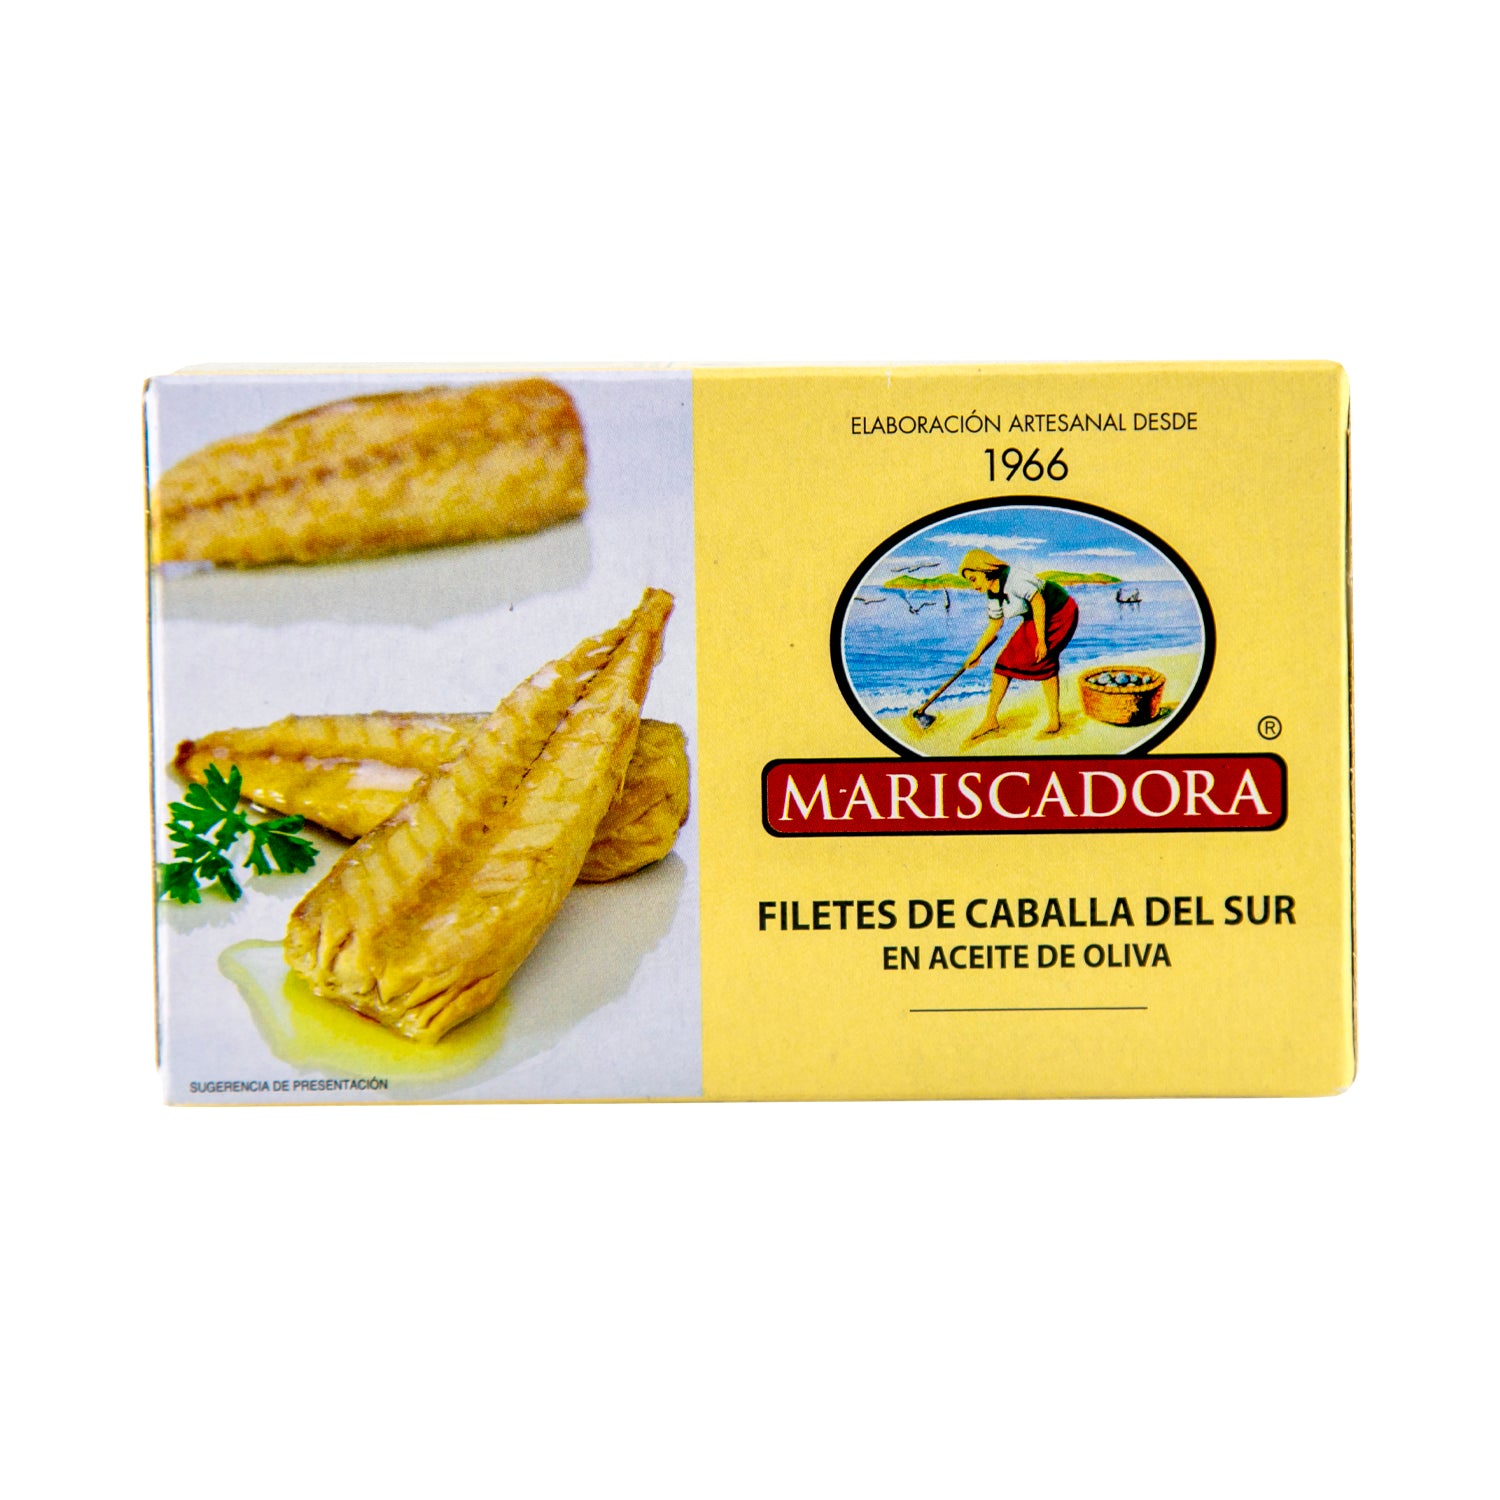 Mariscadora Mackarel (Filets) in Olive oil